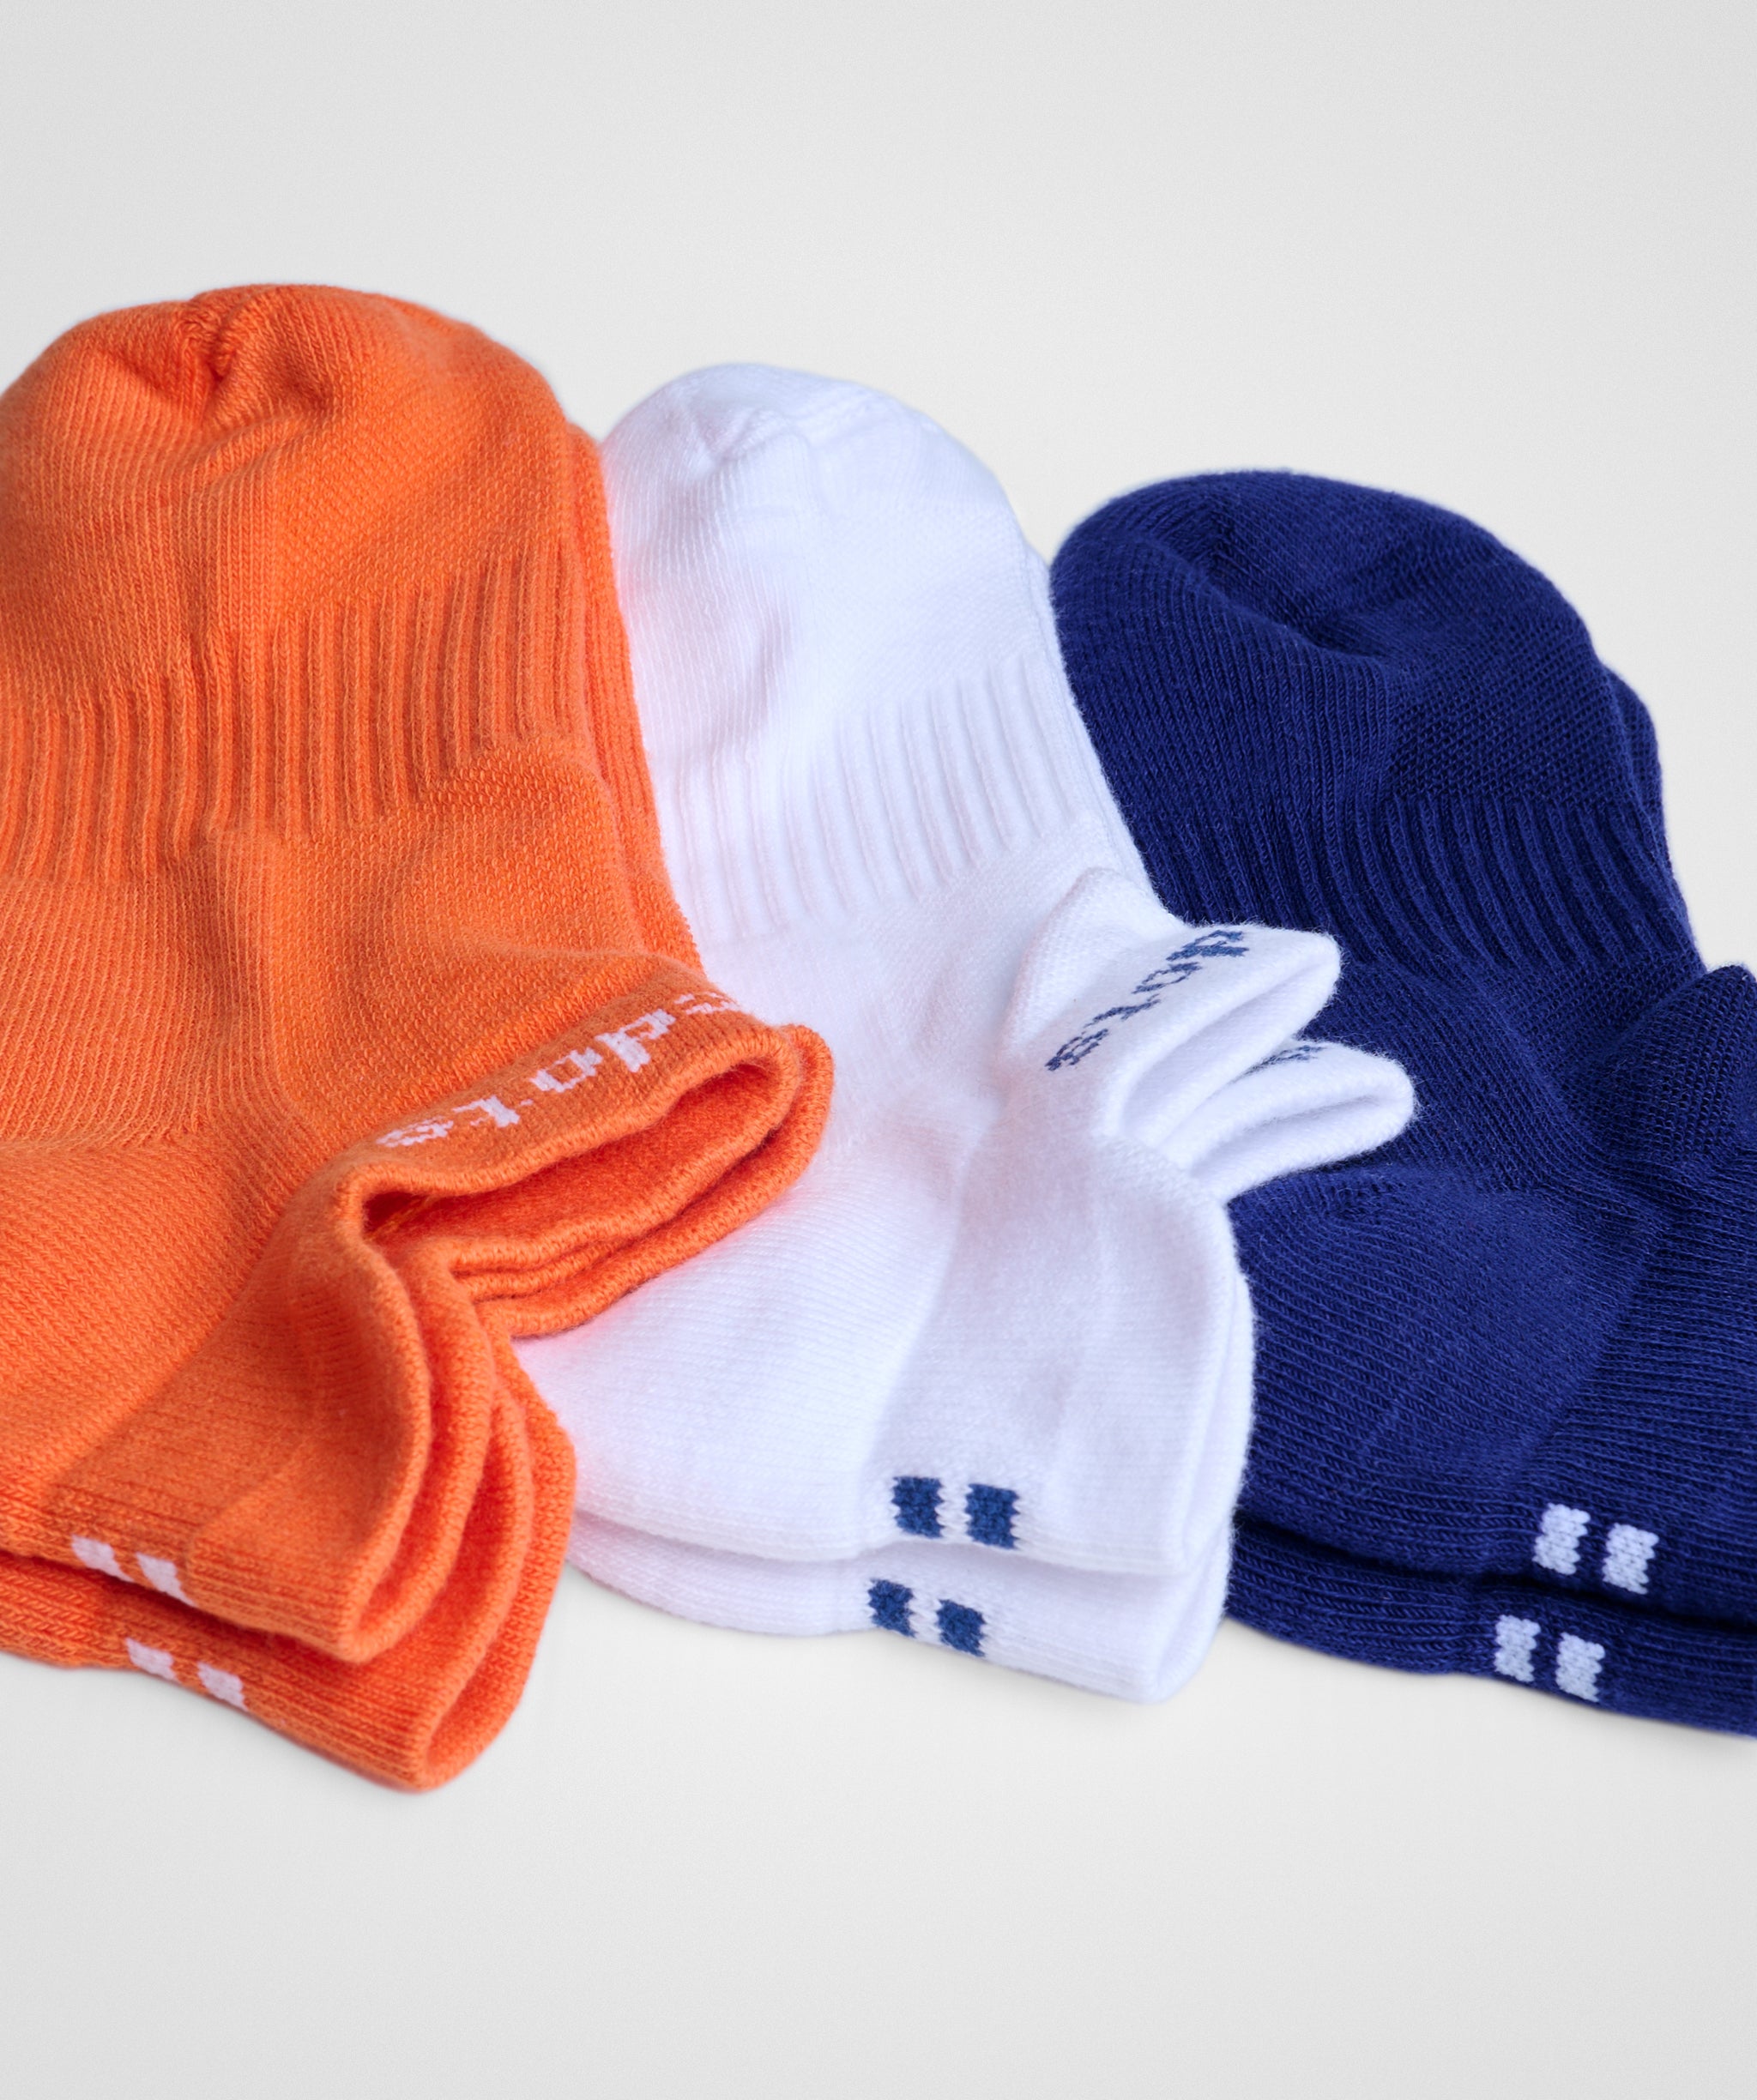 tennis socks for women orange clay color nordicdots.com